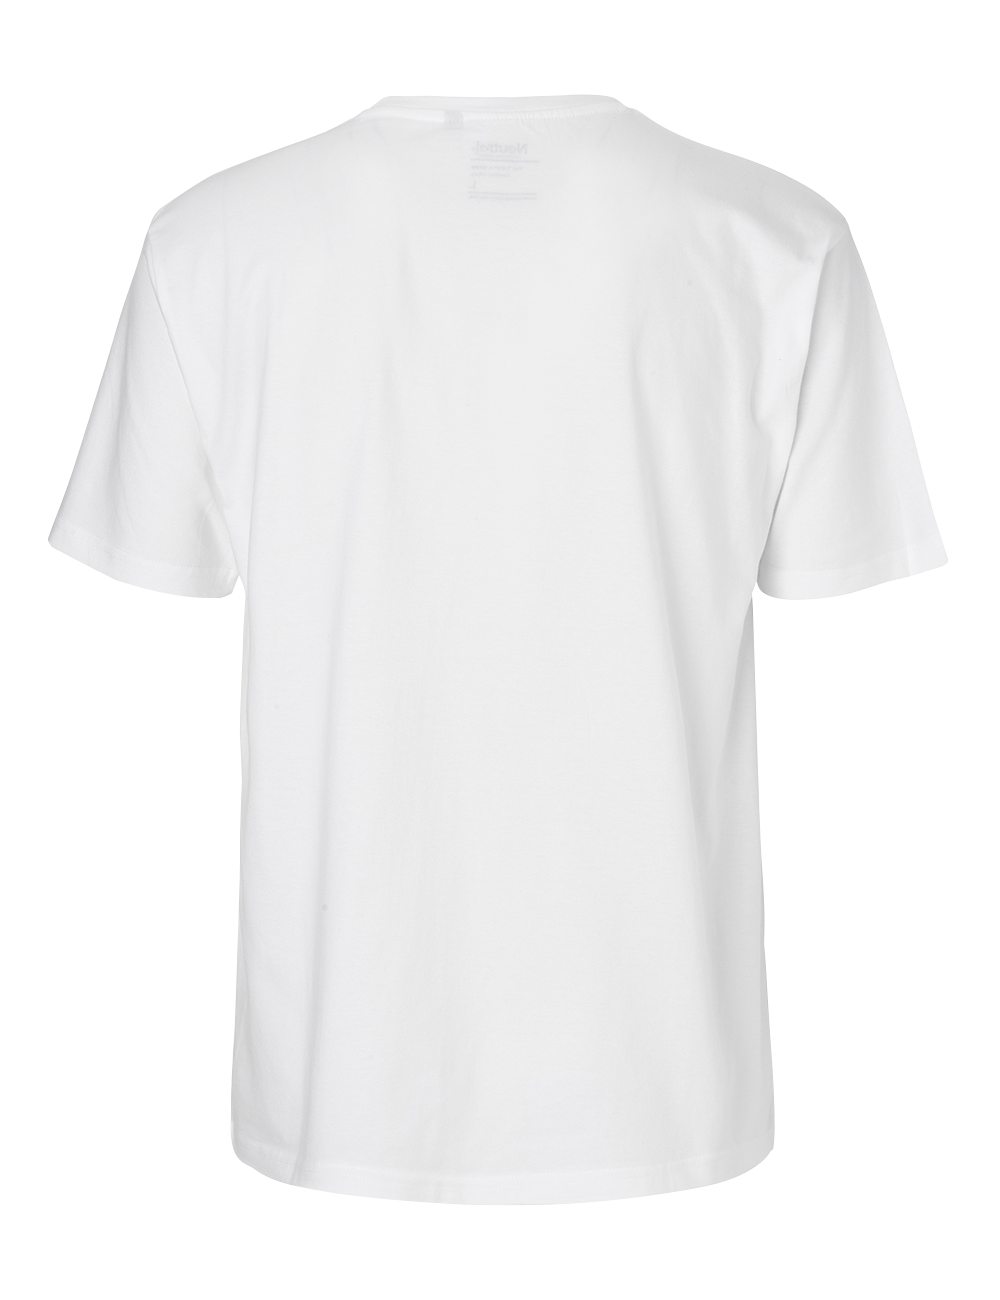 Men's t-shirt, white